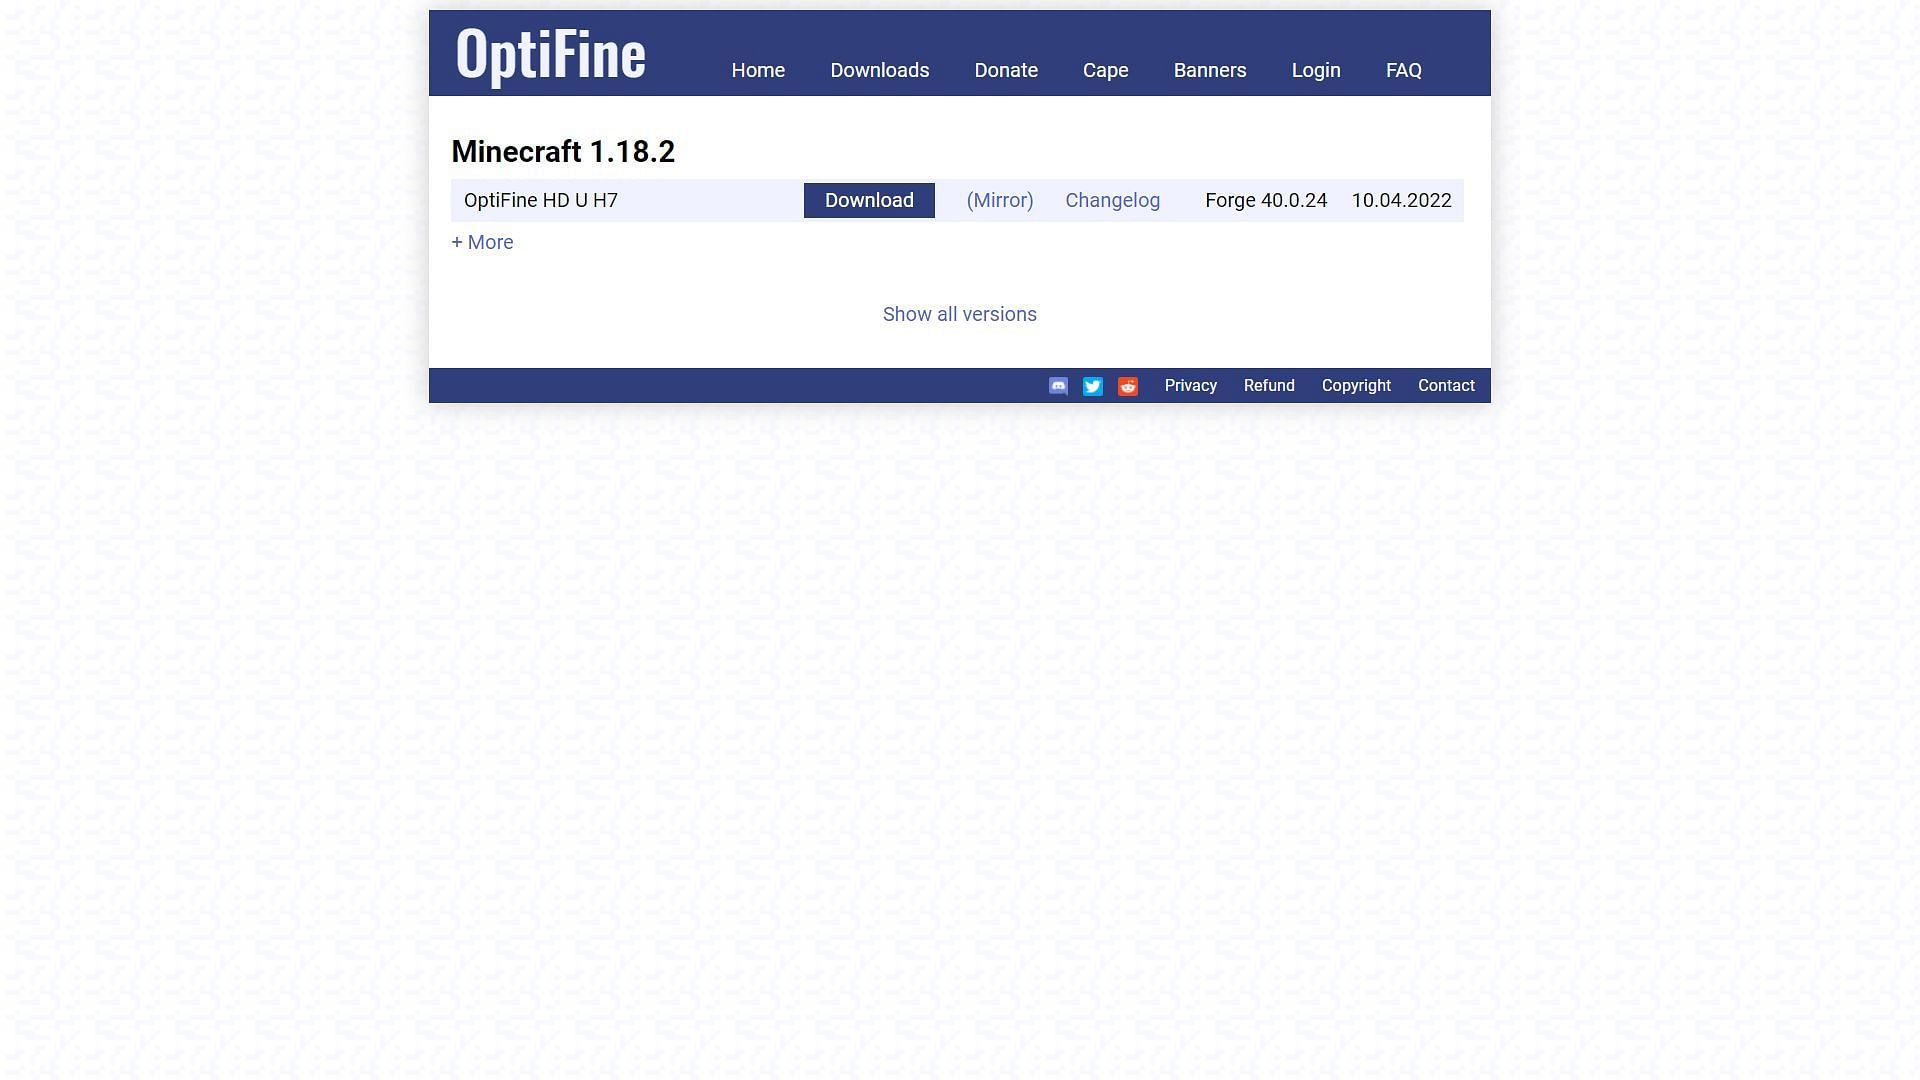 Optifine download page (Image via Sportskeeda)